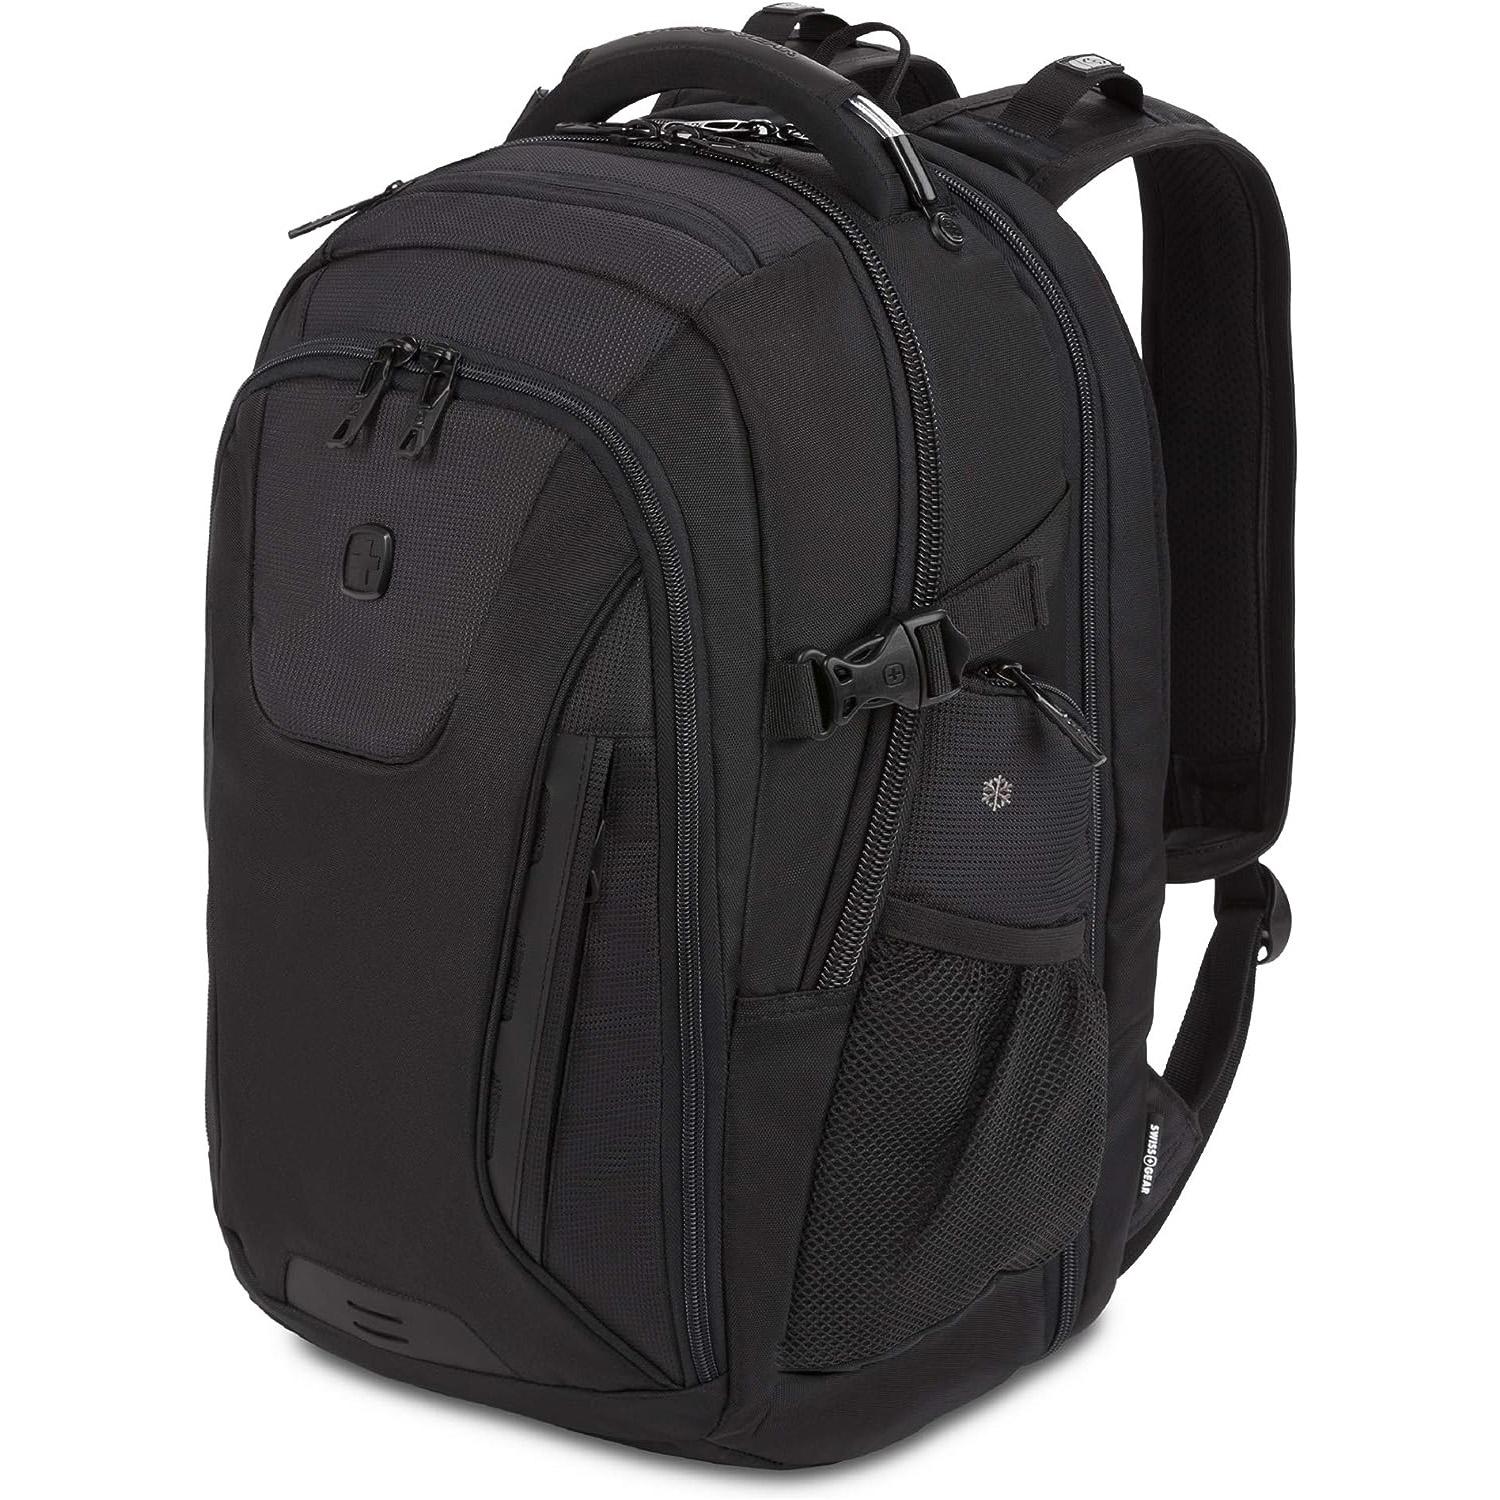 SwissGear ScanSmart 15-inch Notebook Laptop Backpack Bag for $59.99 Shipped